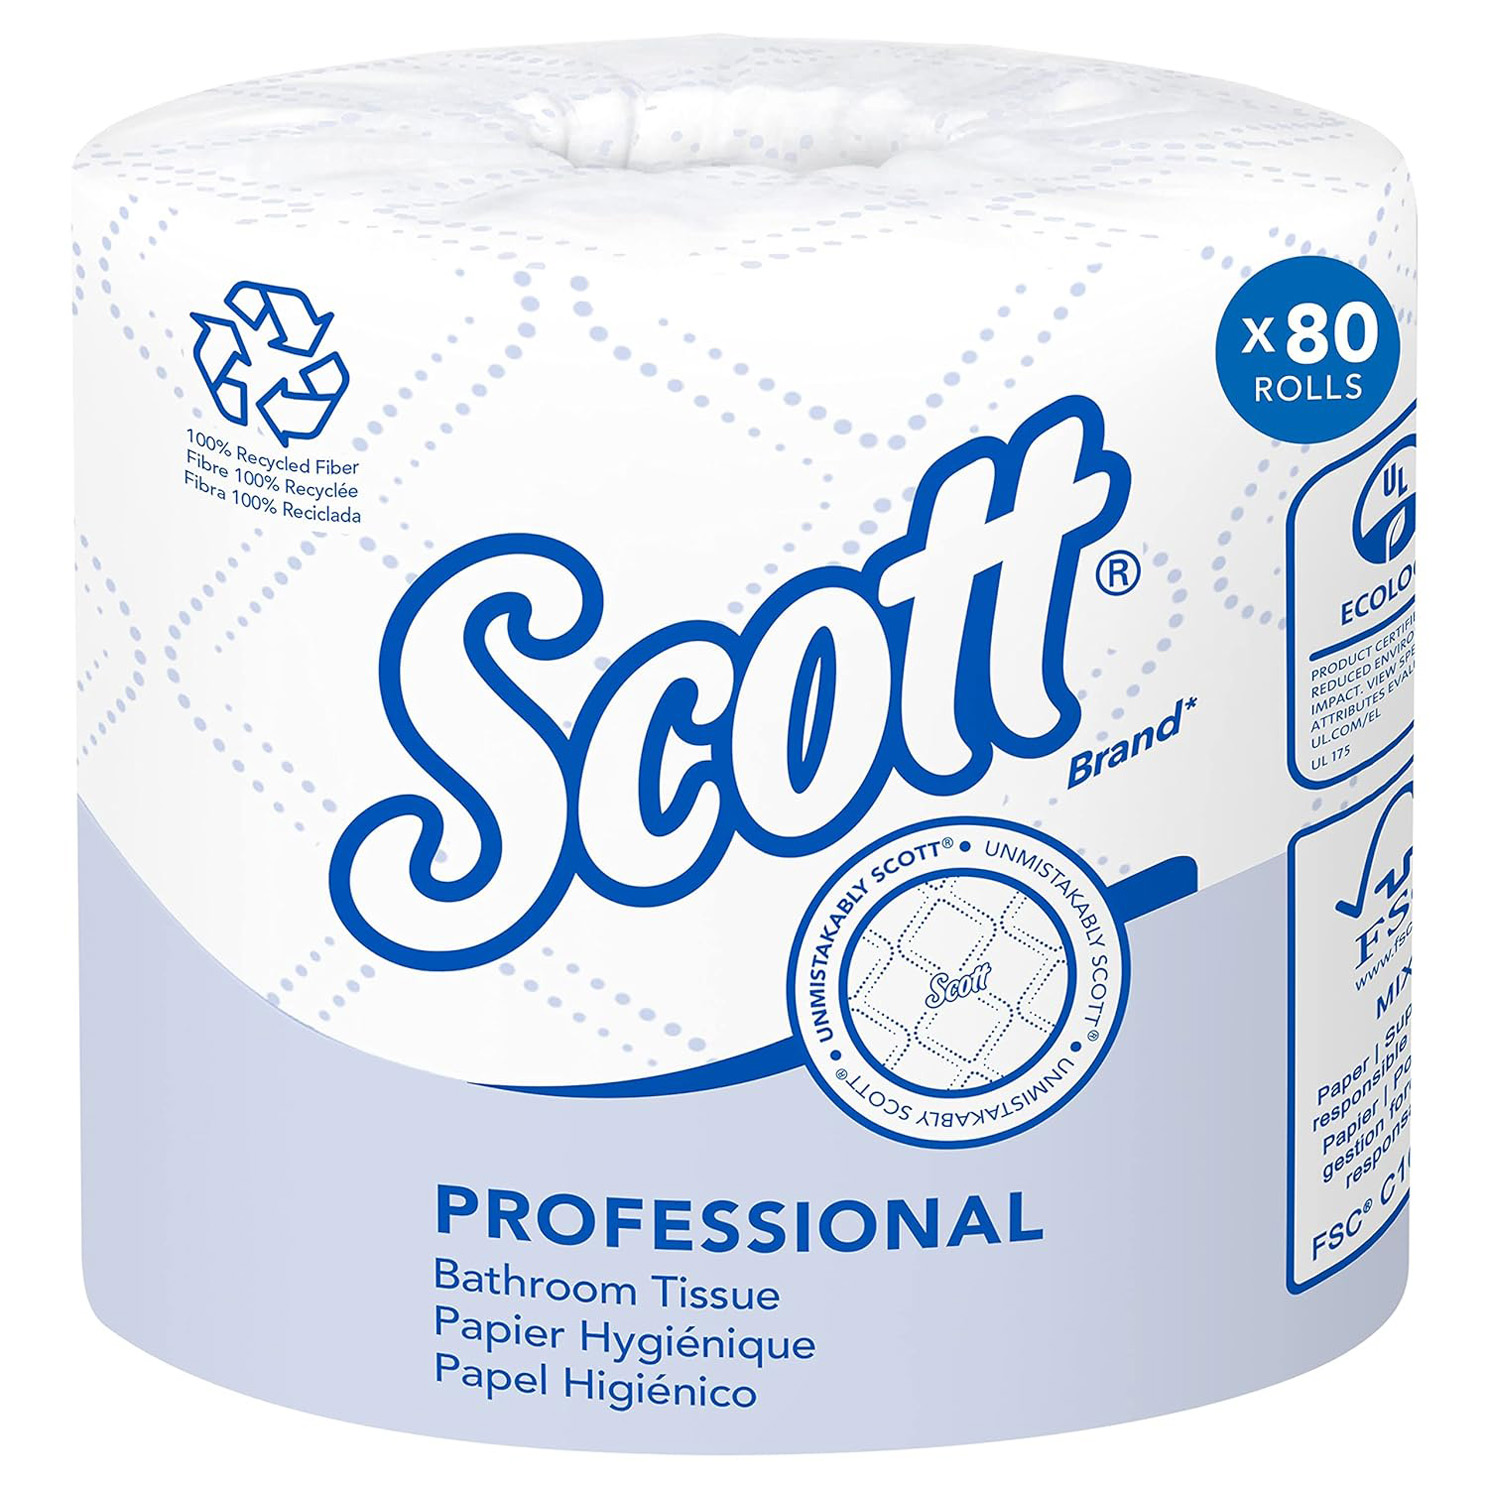 Scott® Professional 100% Recycled Fiber Standard Roll Toilet Paper